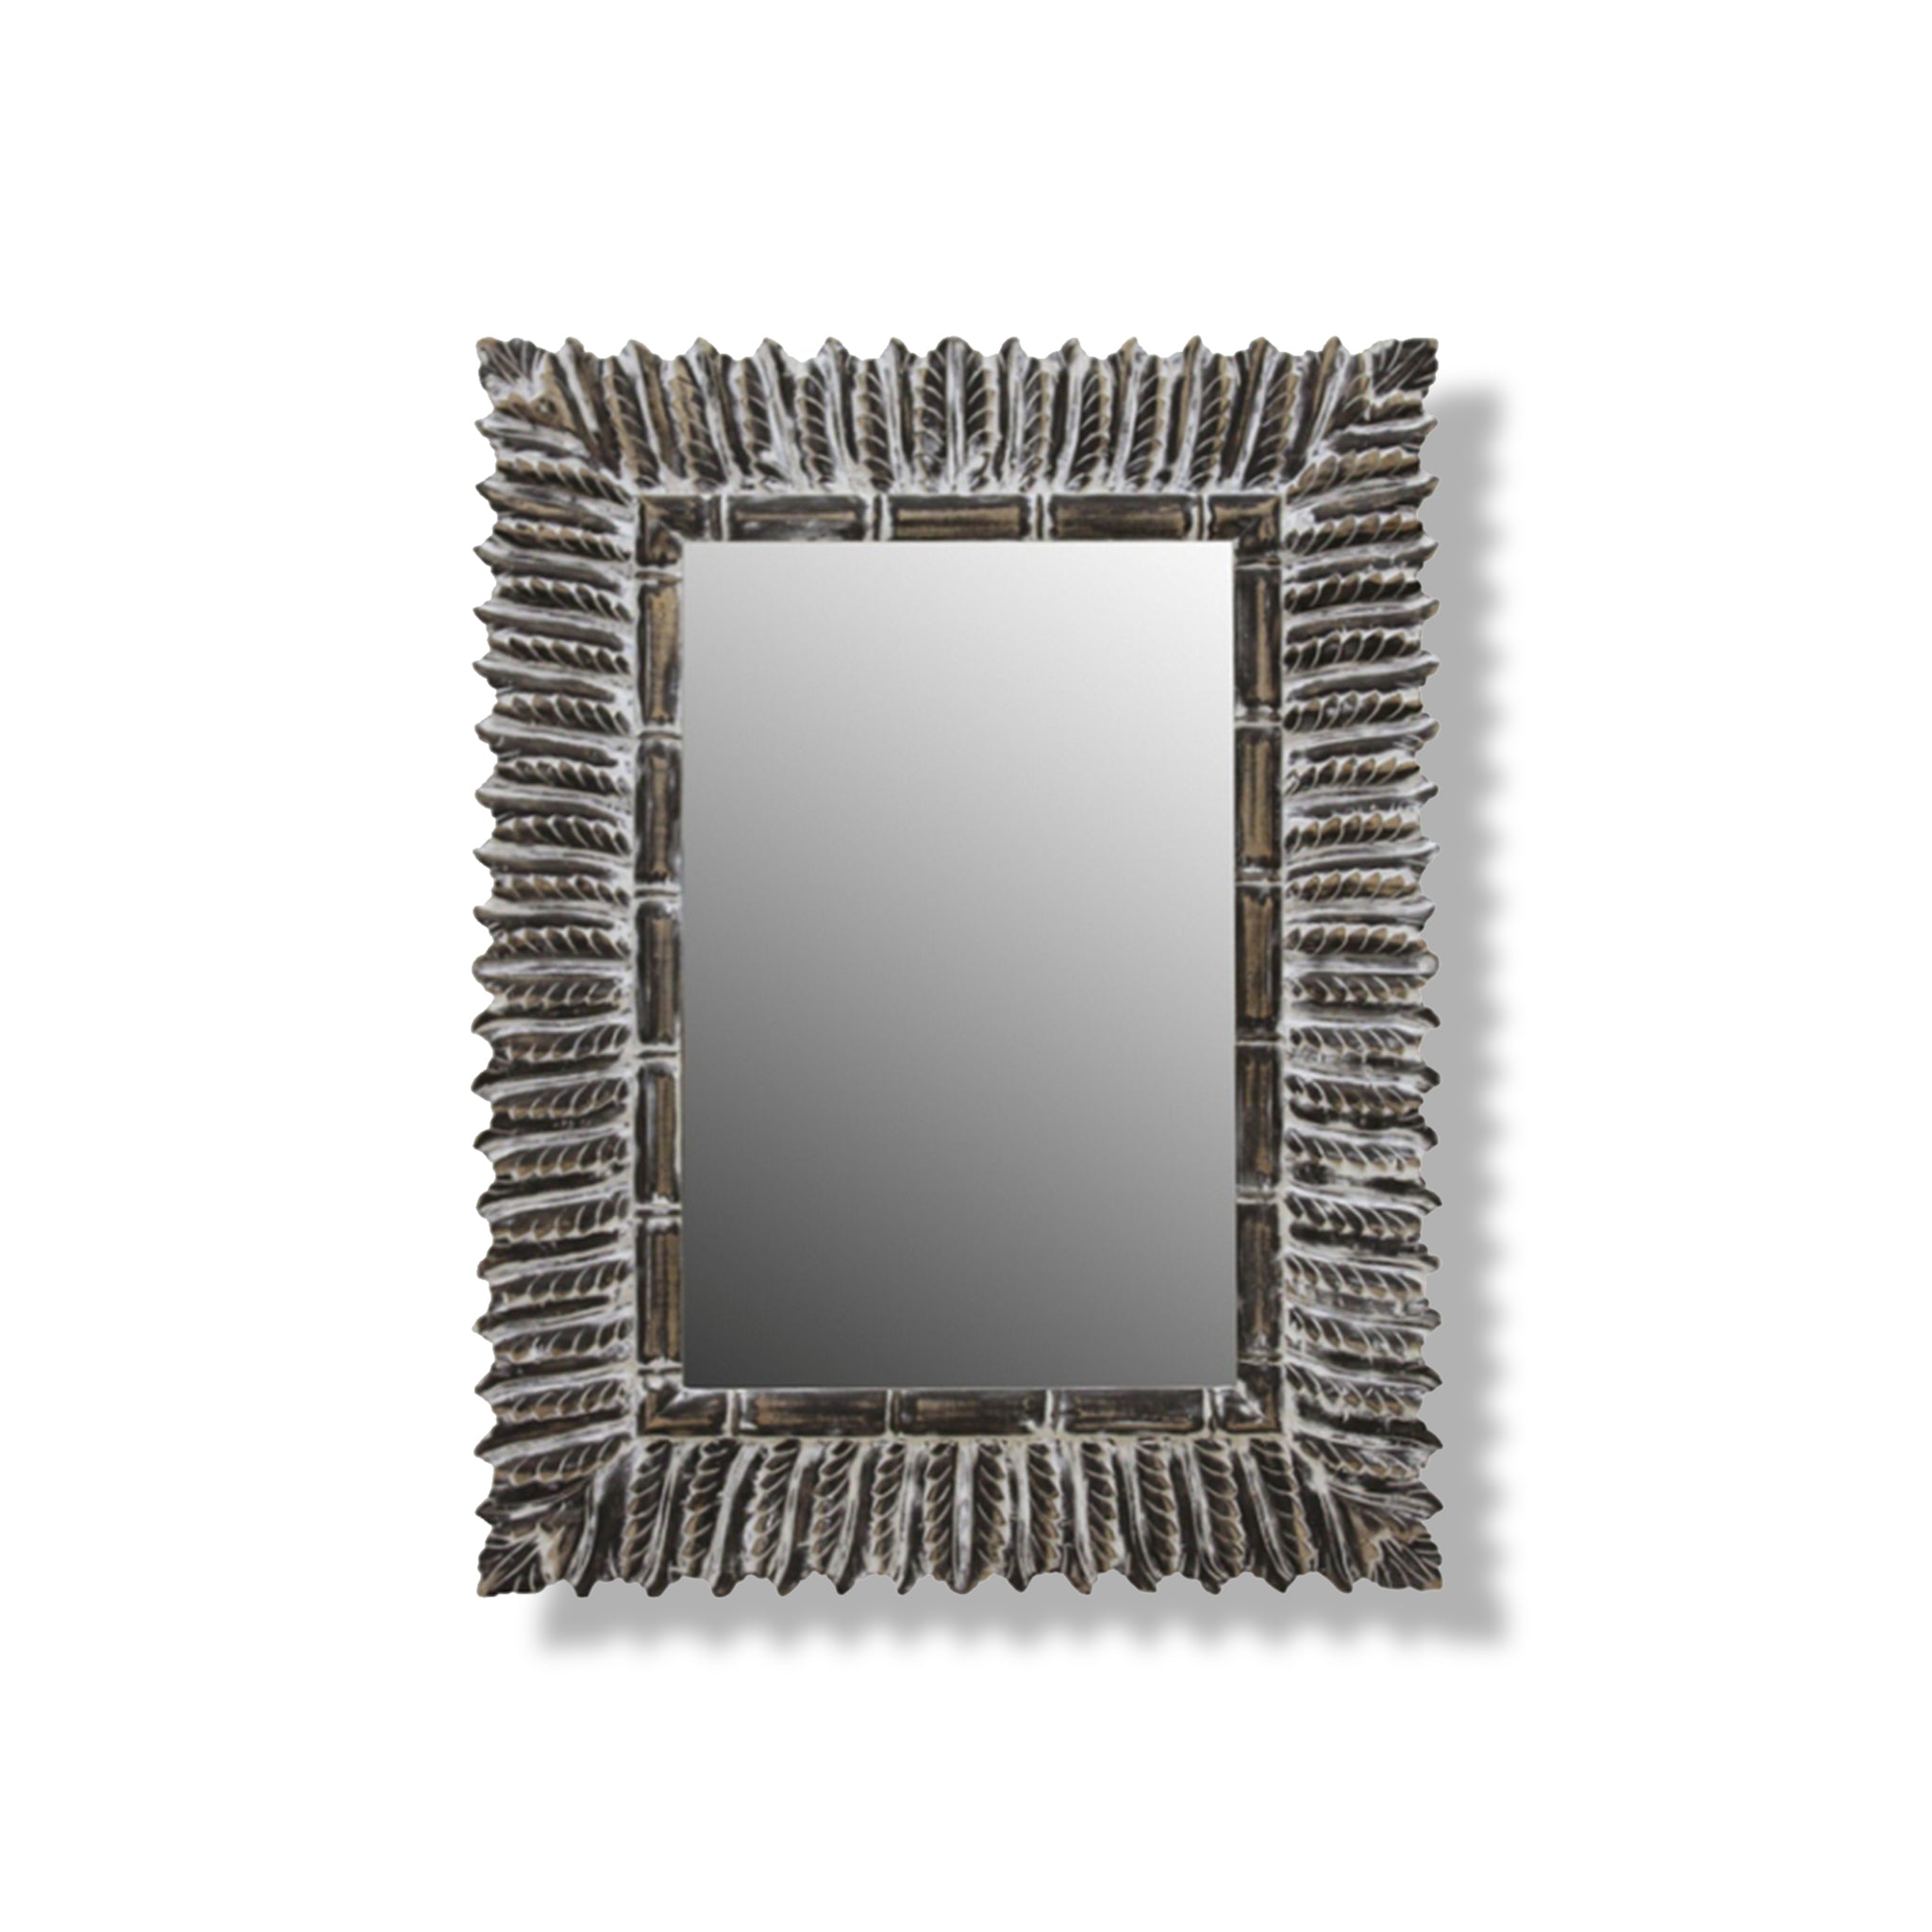 Imlee Wood Frame Mirror